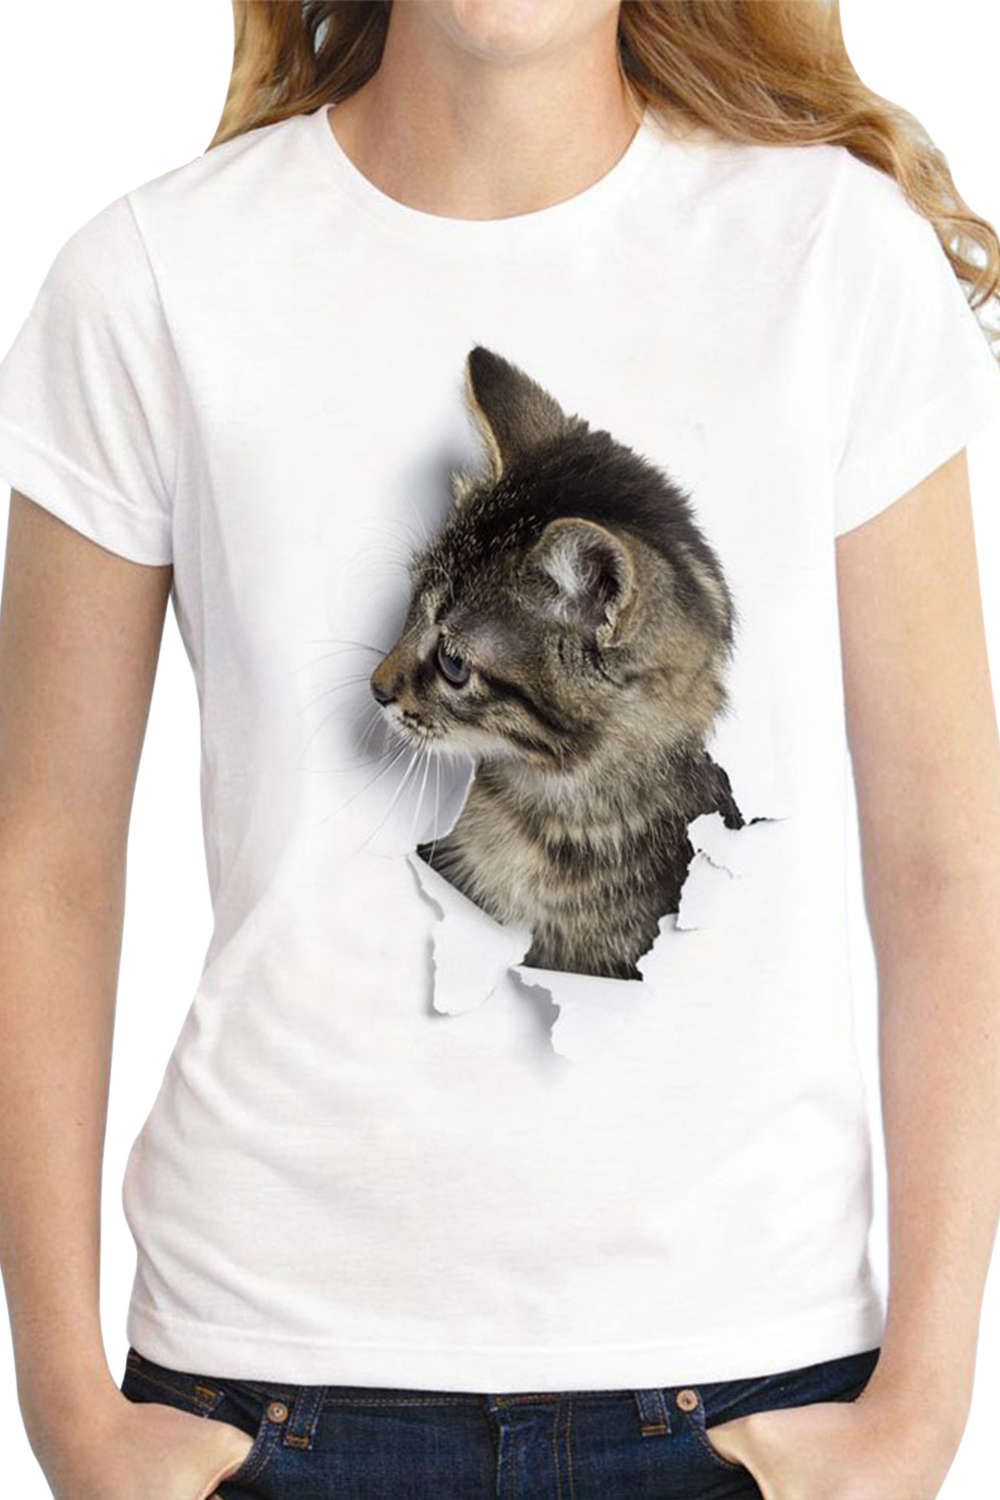 Iyasson Cute Cat Print T-shirt In White